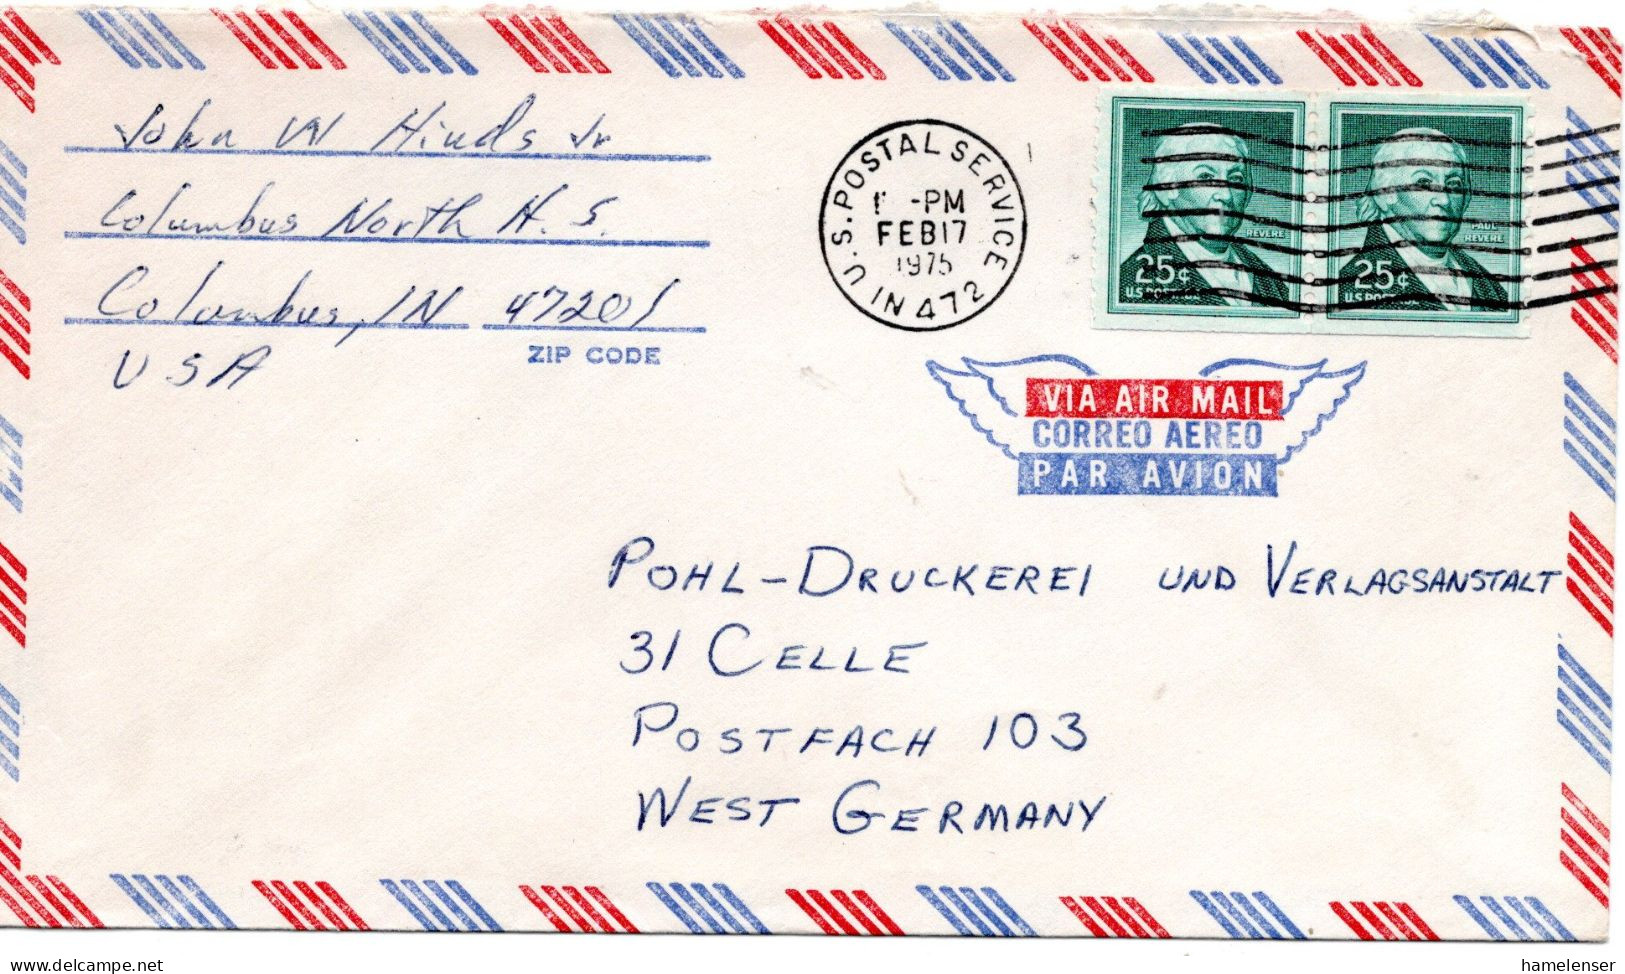 75199 - USA - 1975 - 2@25¢ Revere (Rolle) A LpBf U.S.POSTAL SERVICE IN 472 -> Westdeutschland - Briefe U. Dokumente